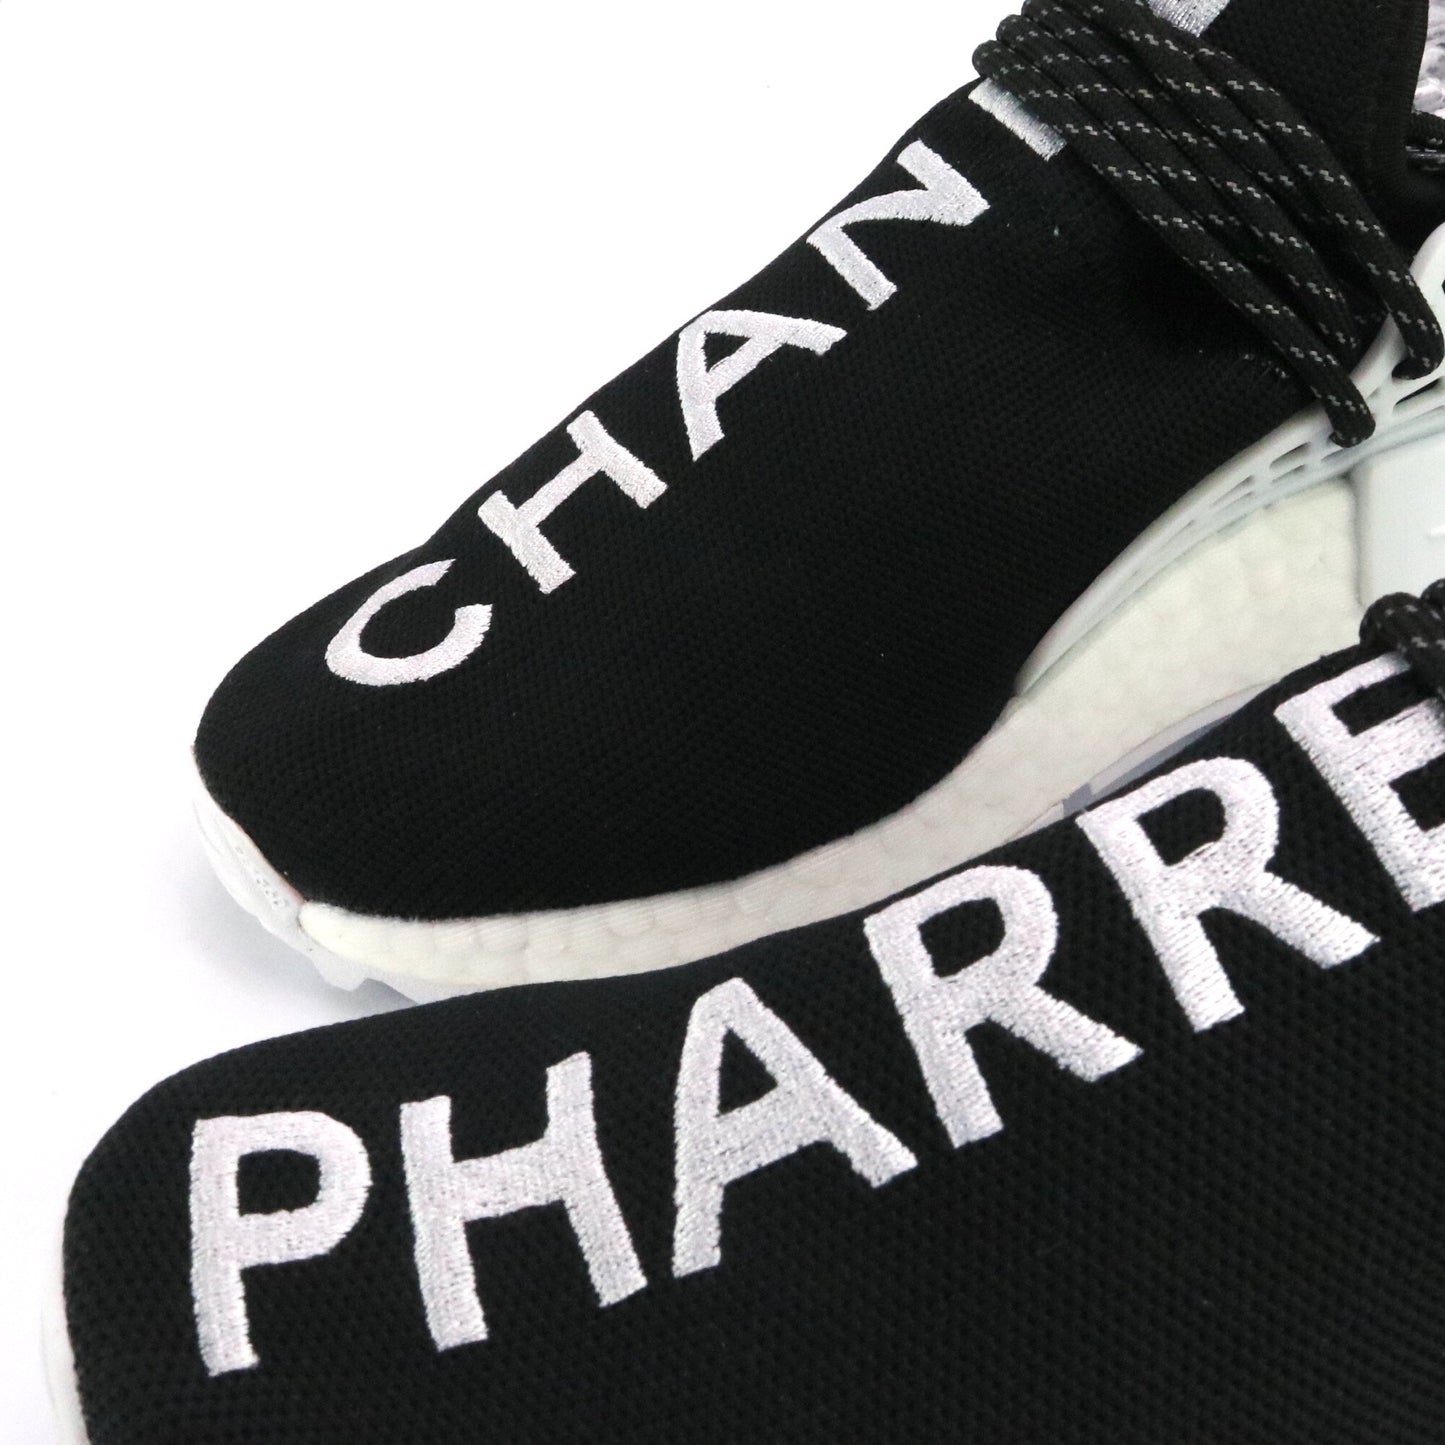 Adidas Human Race NMD Pharrell x Chanel